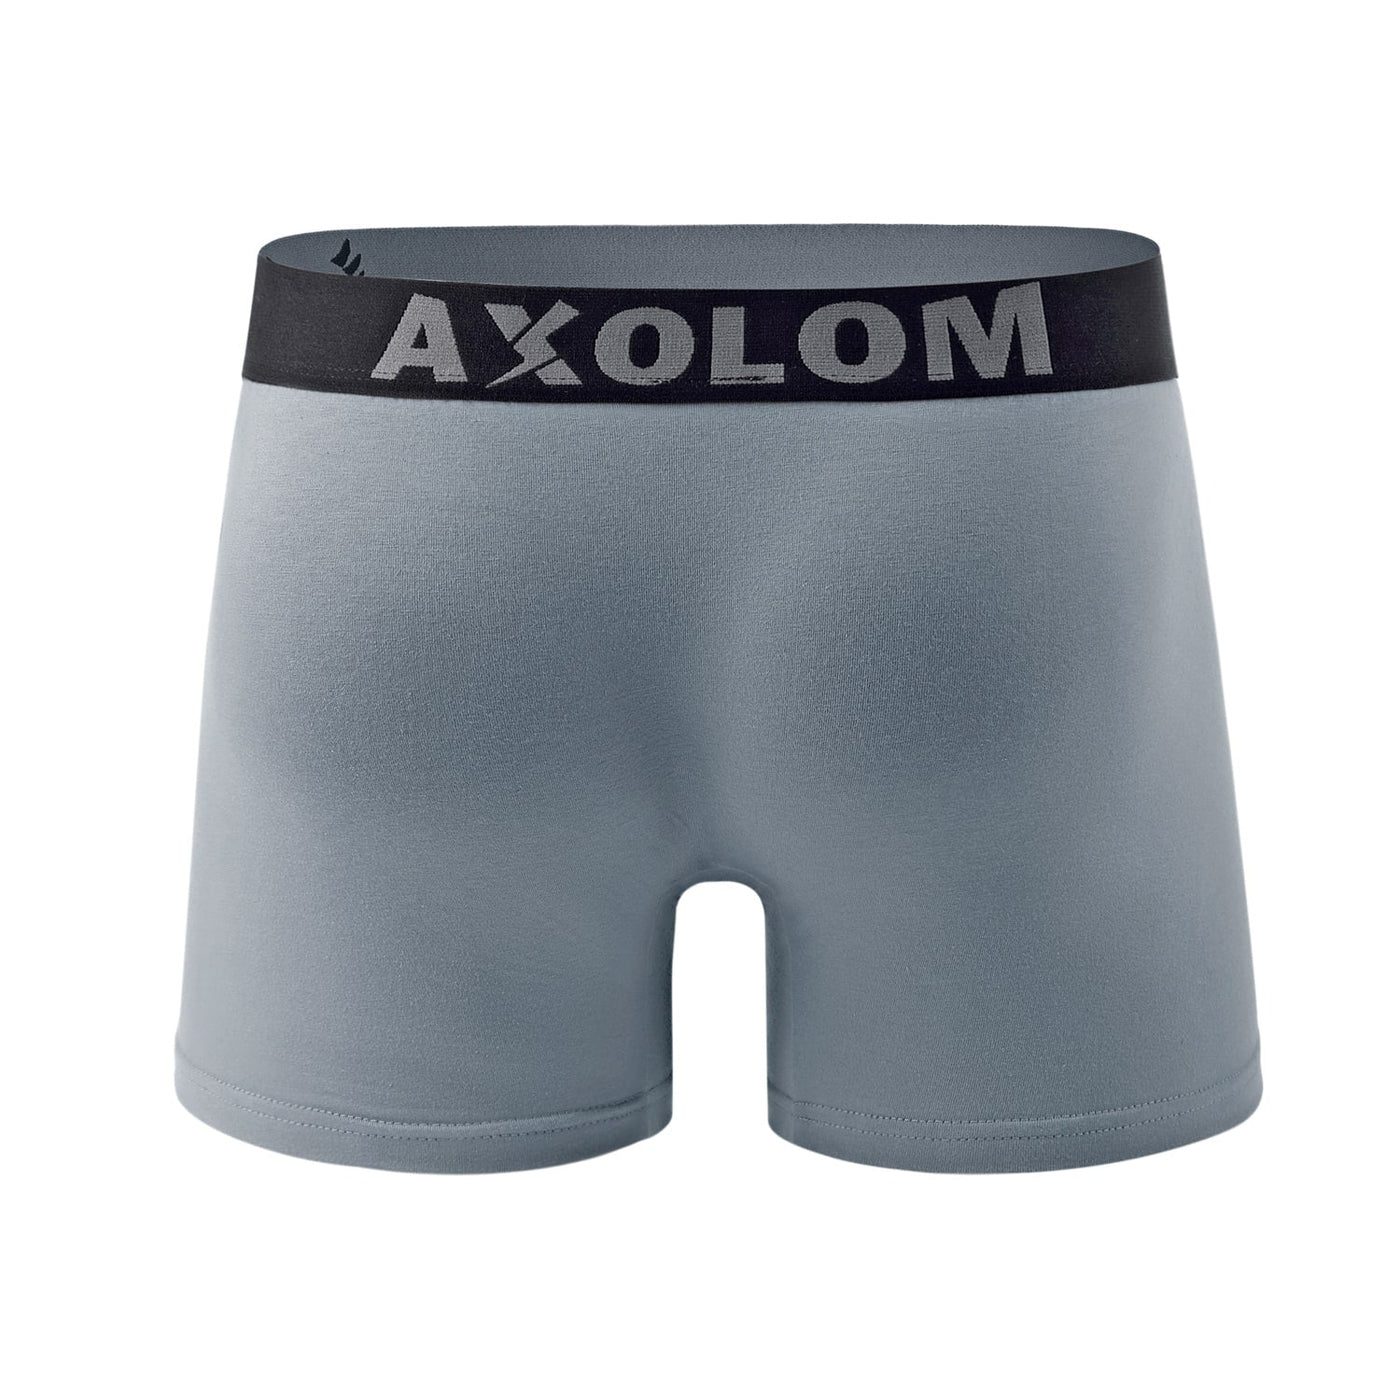 AXOLOM STP Trunk with Curtain 1.5" O Ring - Axolom